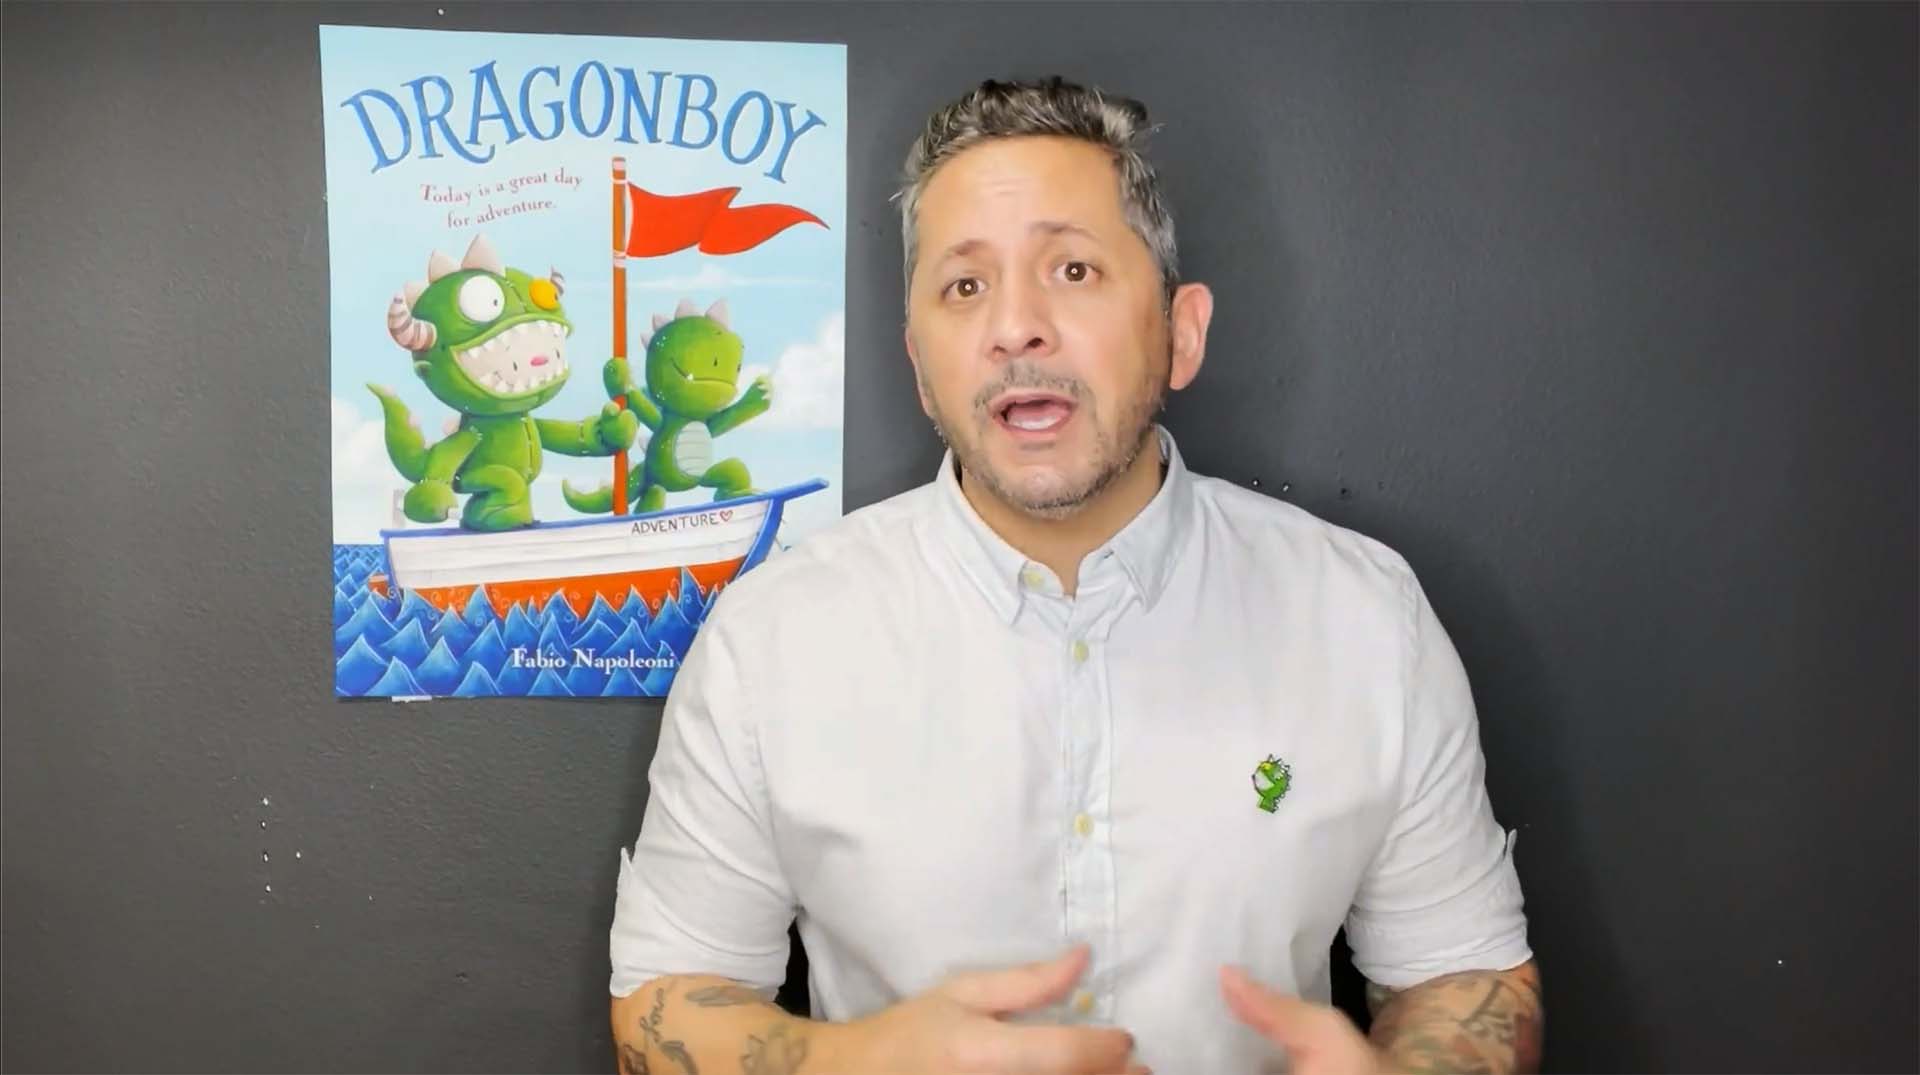 Load video: Dragonboy 1 Book